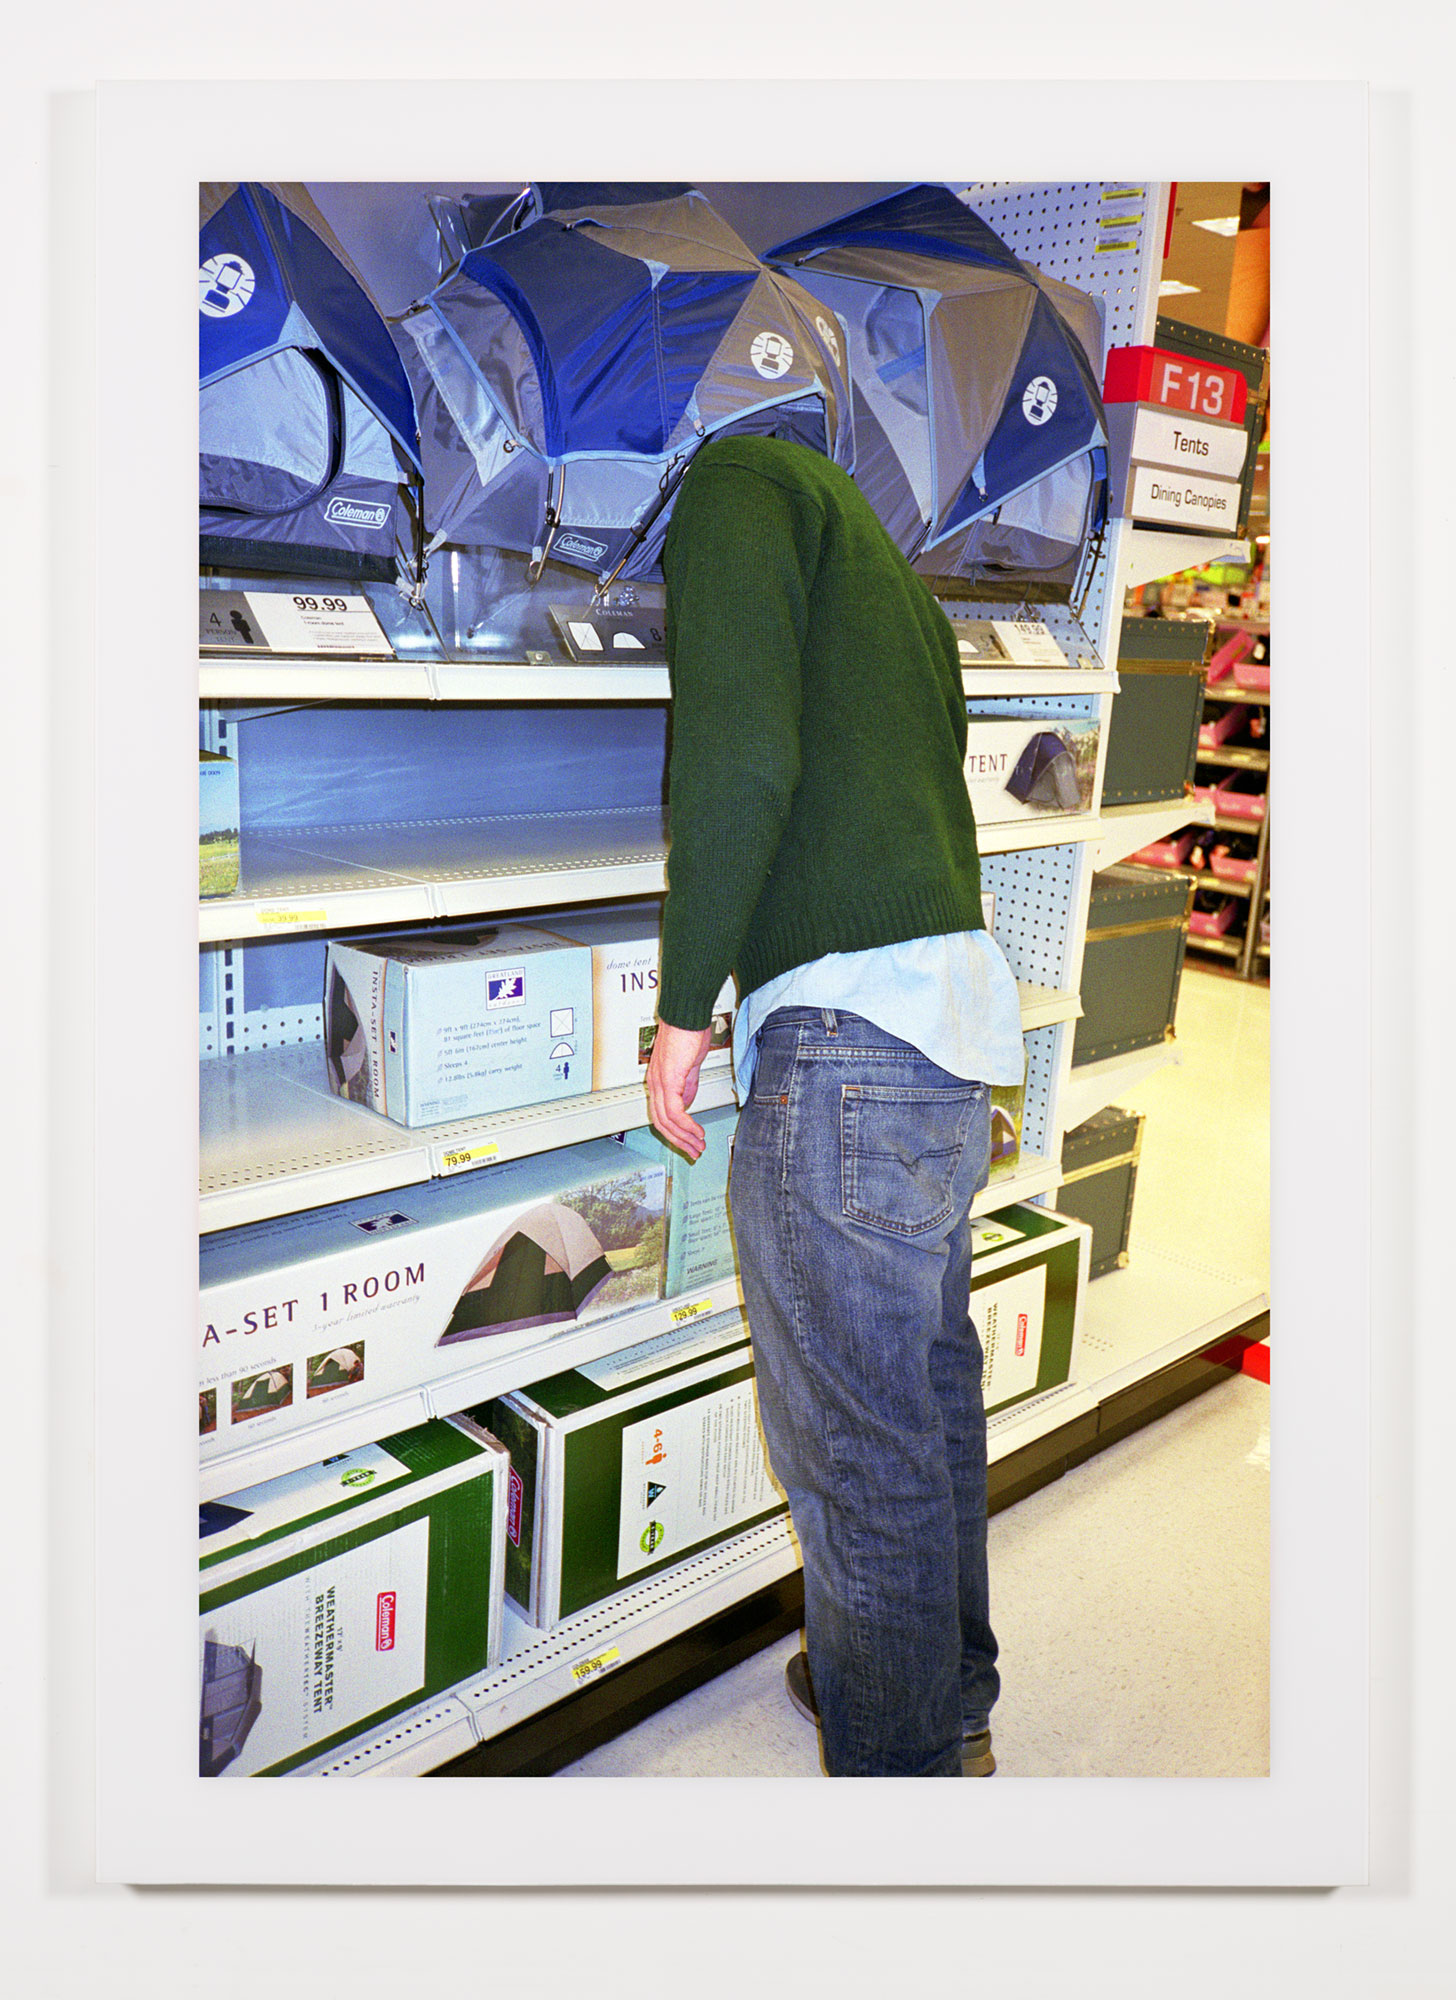   The Phenomenology of Shopping (Target, Dutchess County Mall, Kingston, NY)    2002   Chromogenic print  68 x 47 3/4 inches    